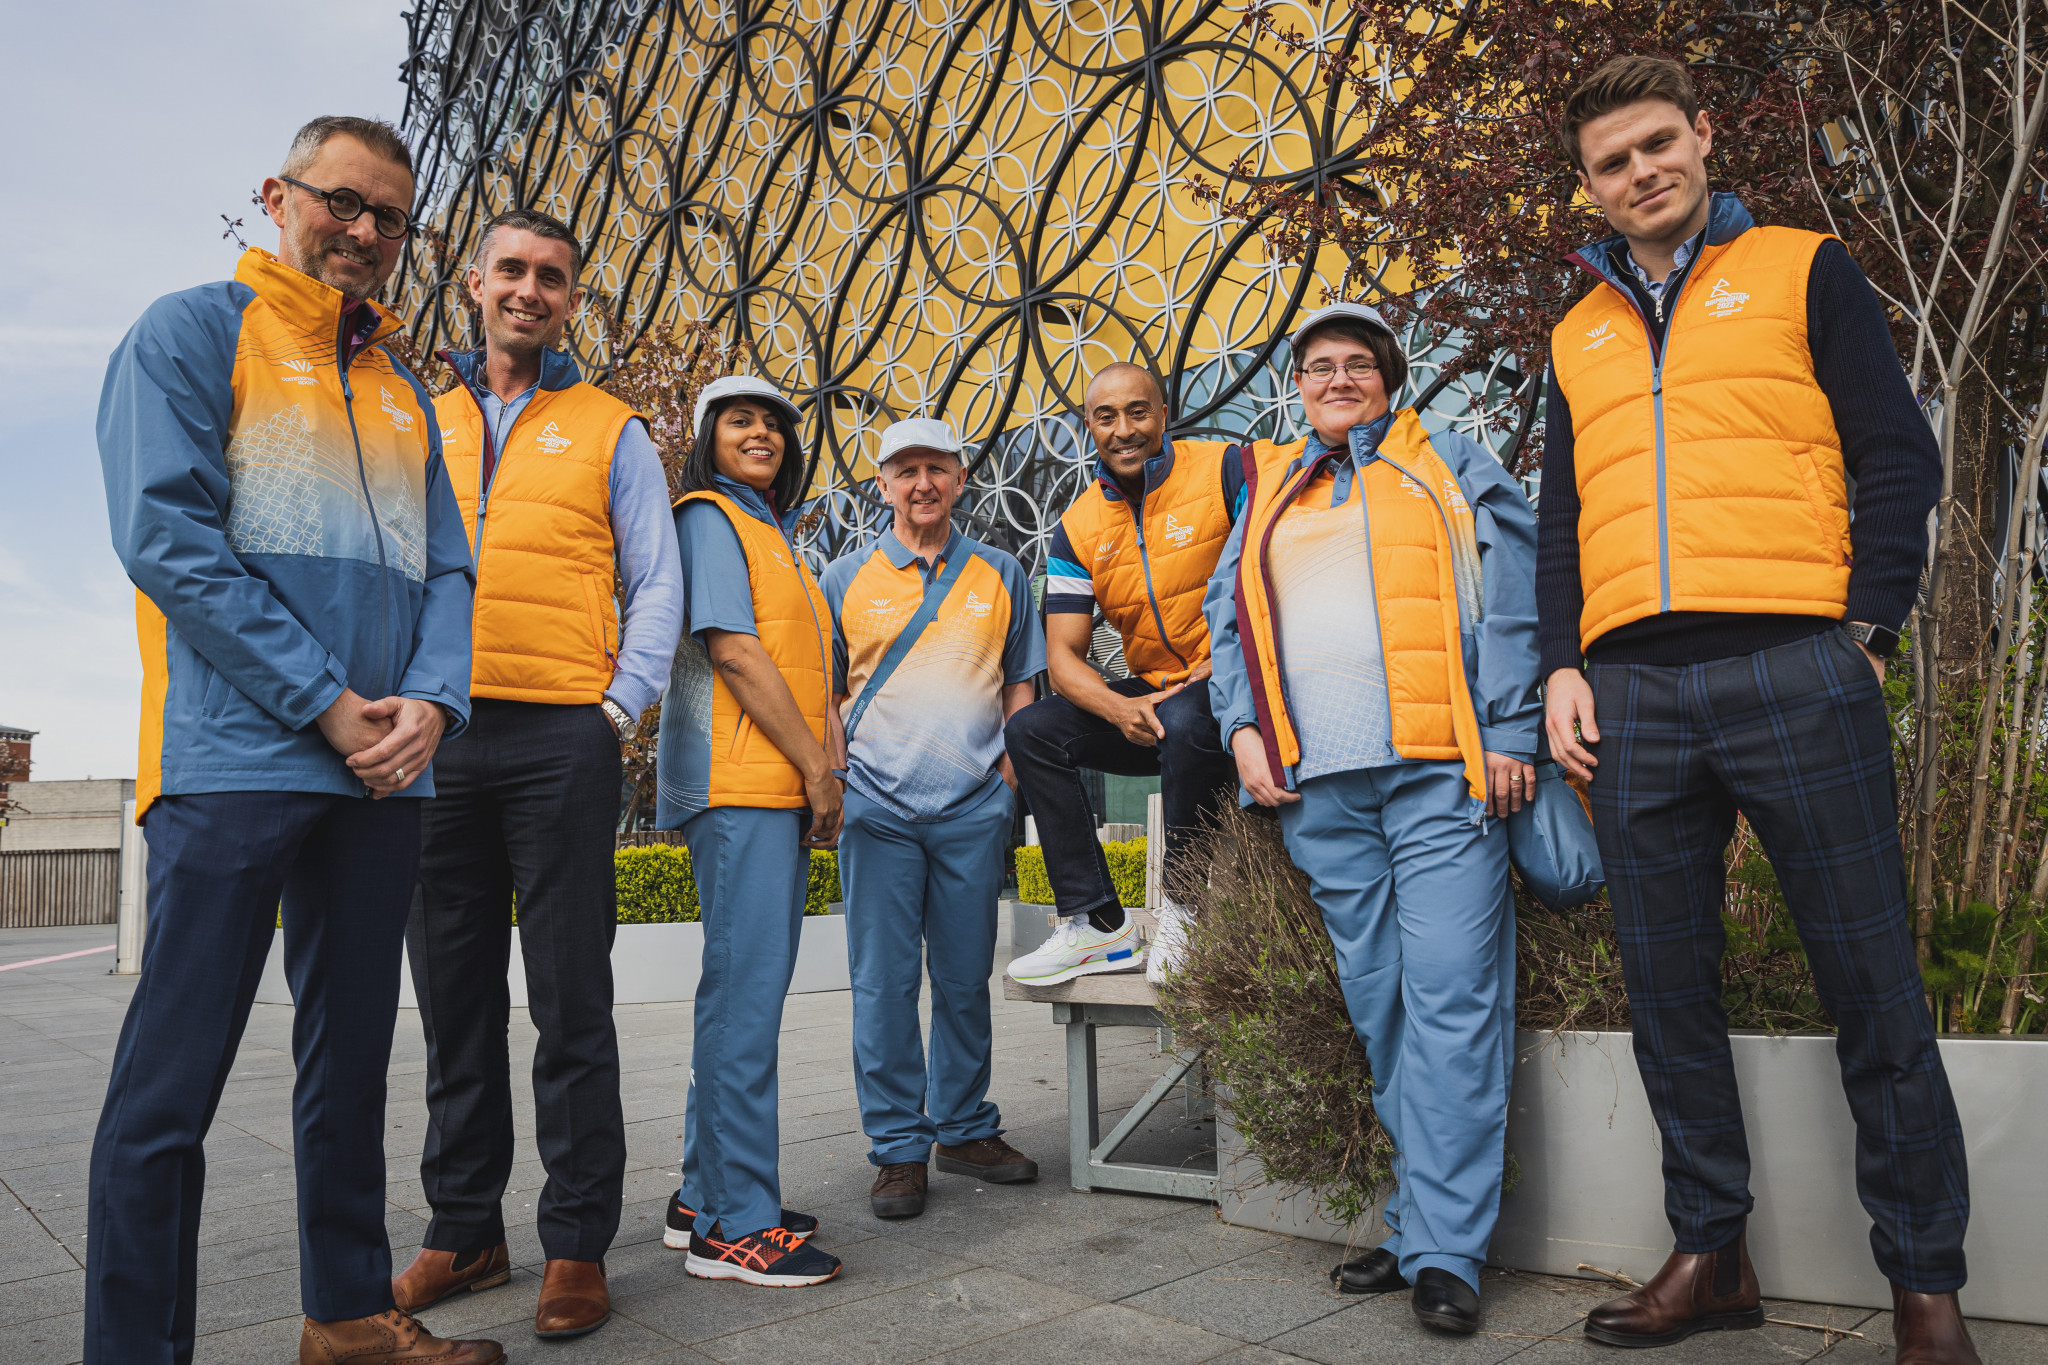 Birmingham 2022 volunteer uniforms unveiled featuring tribute to the city